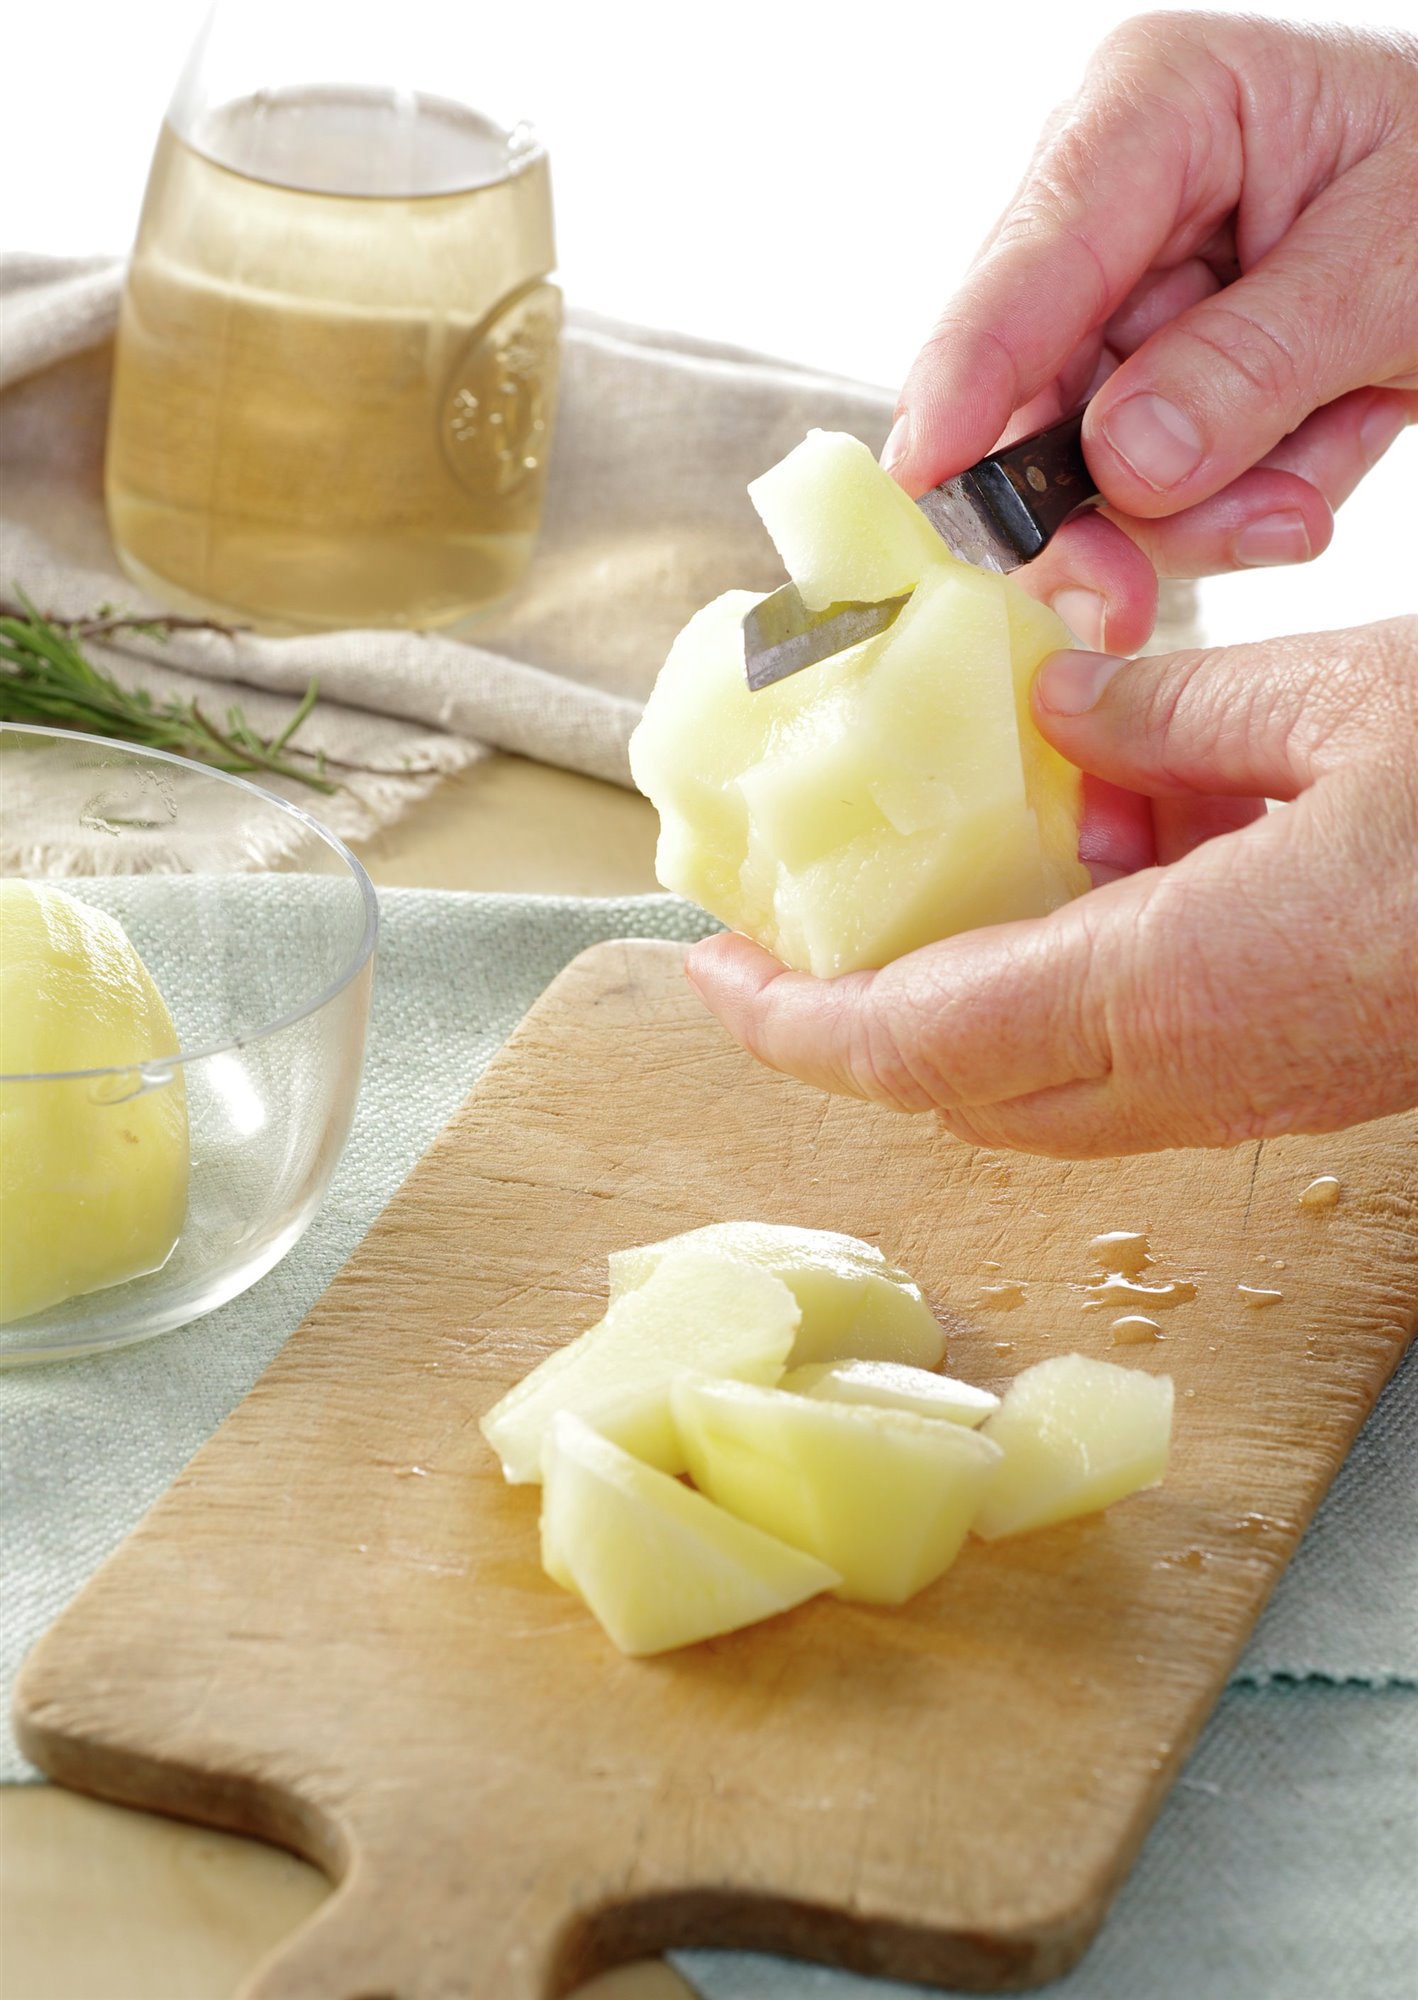 4. Chasca las patatas